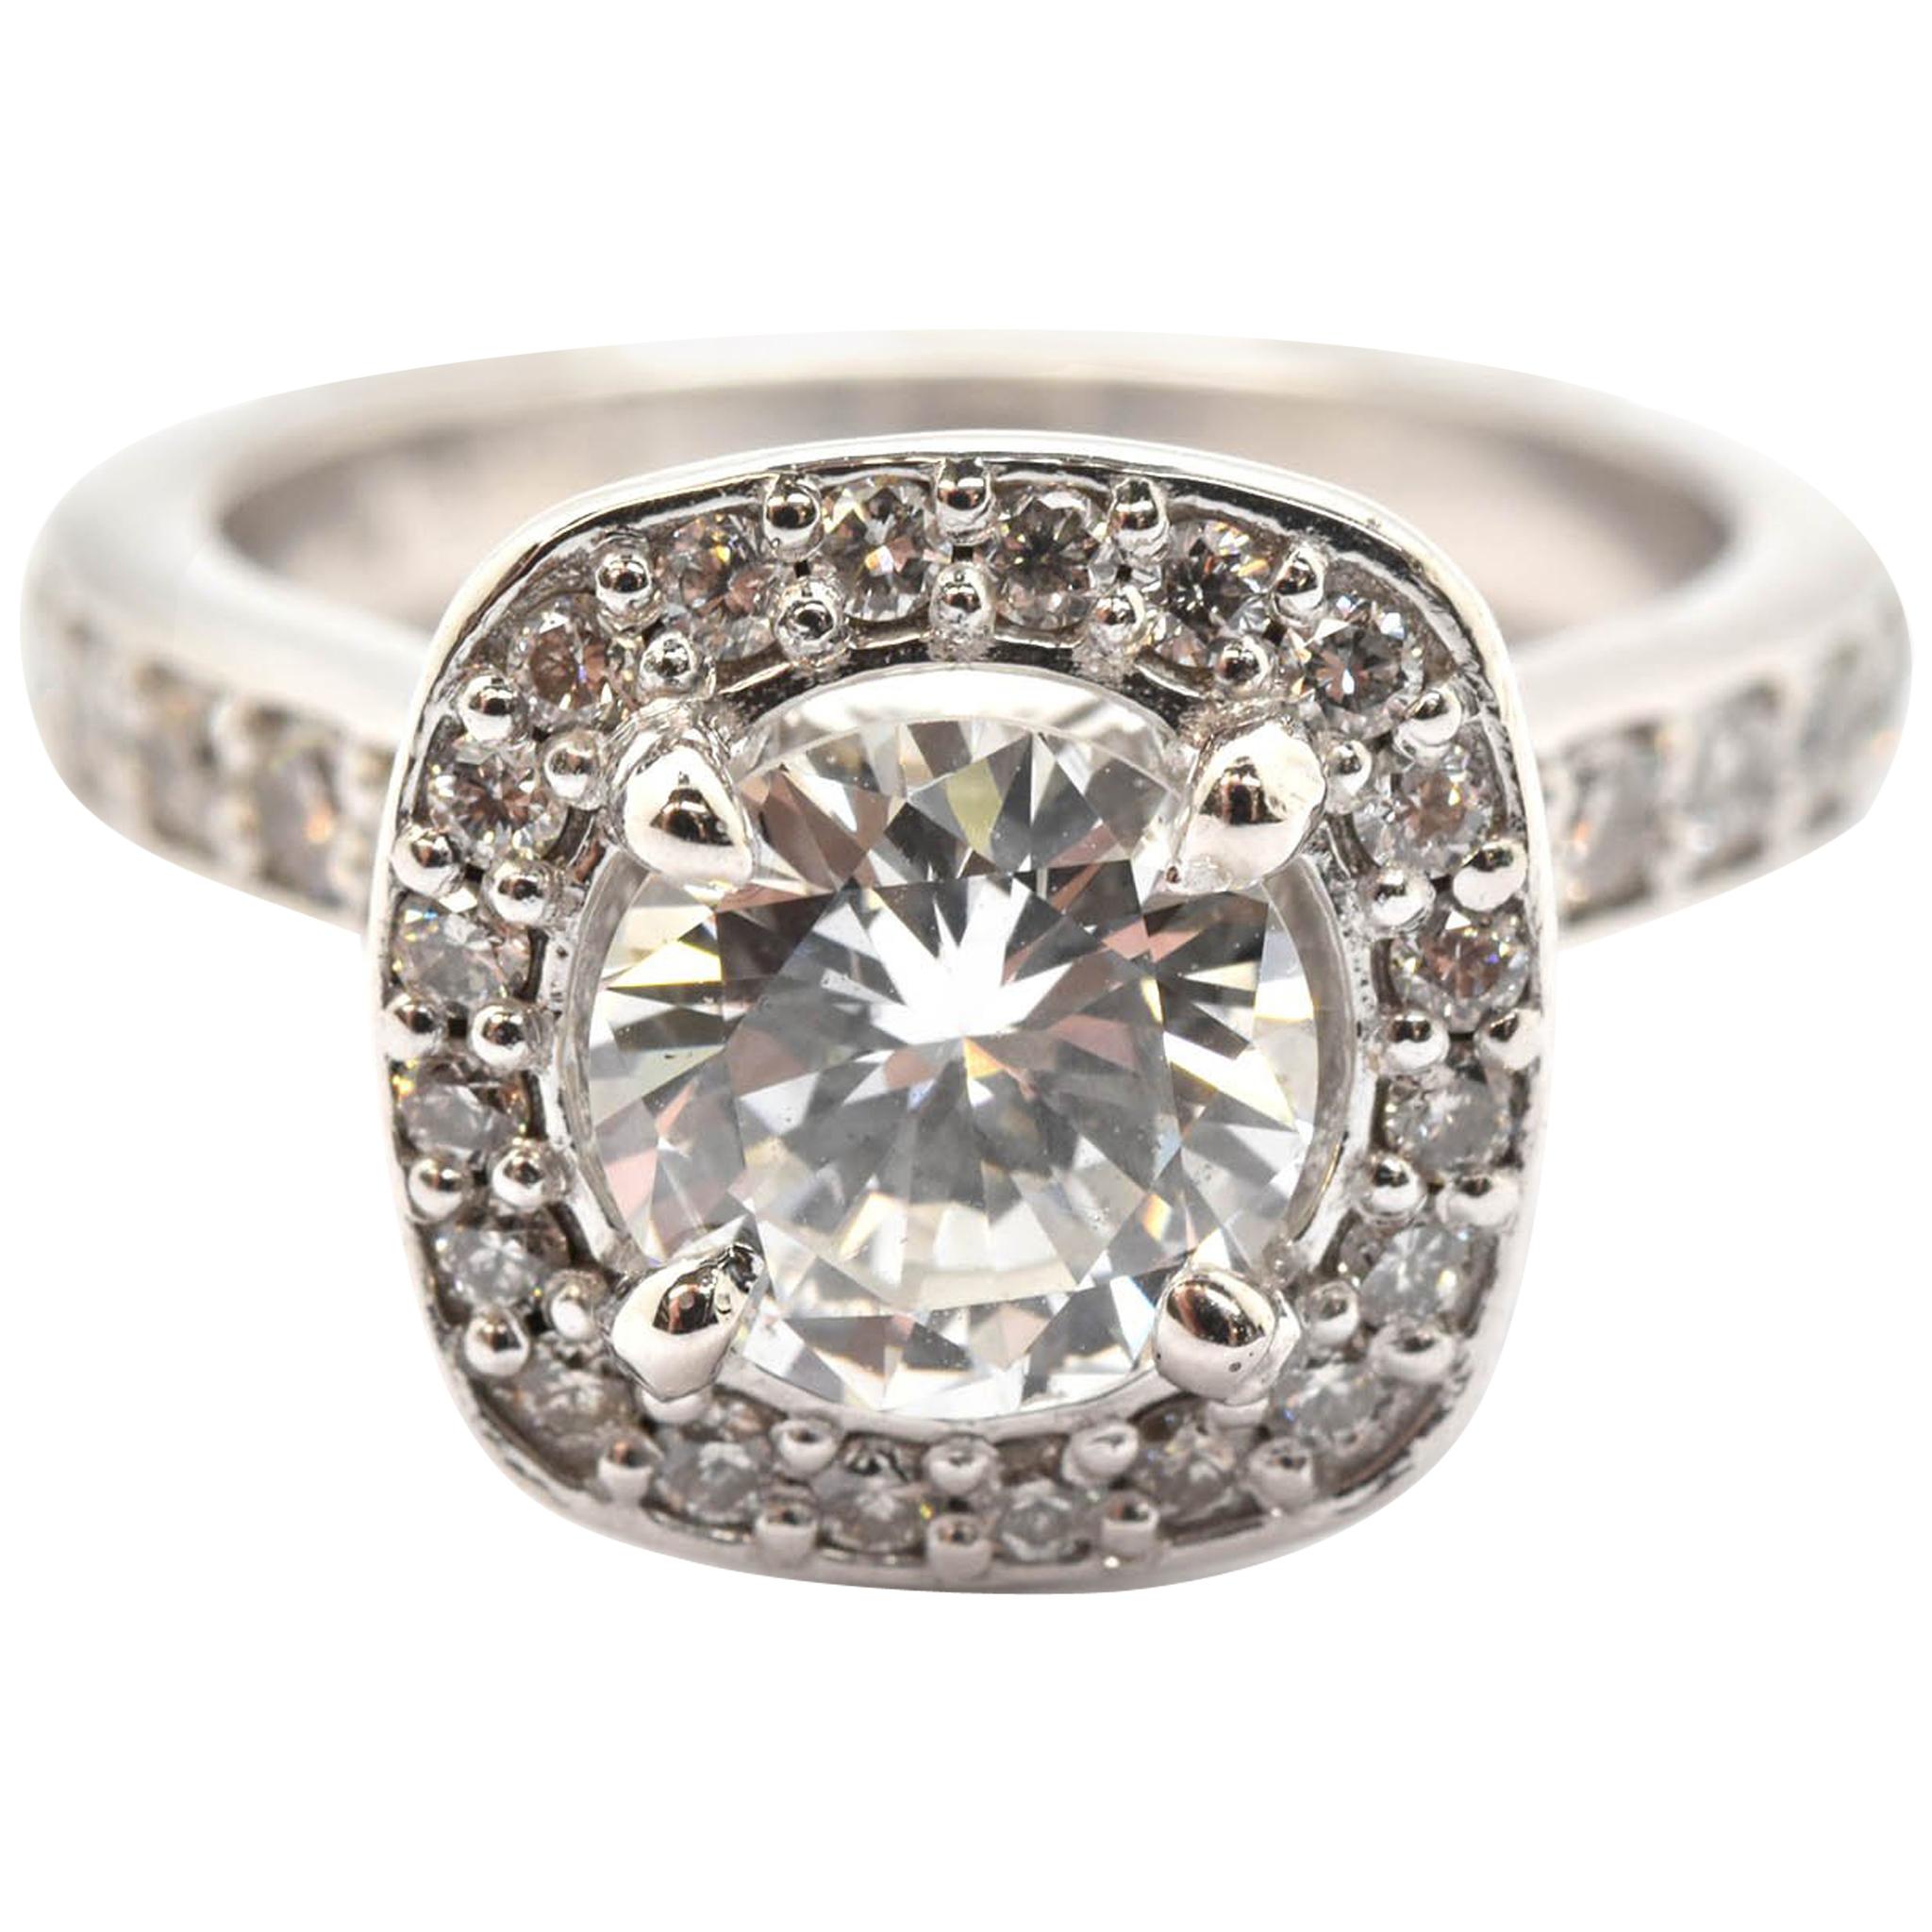 Platinum Round 0.98 Carat Diamond Engagement Ring with Diamond Halo and Mounting